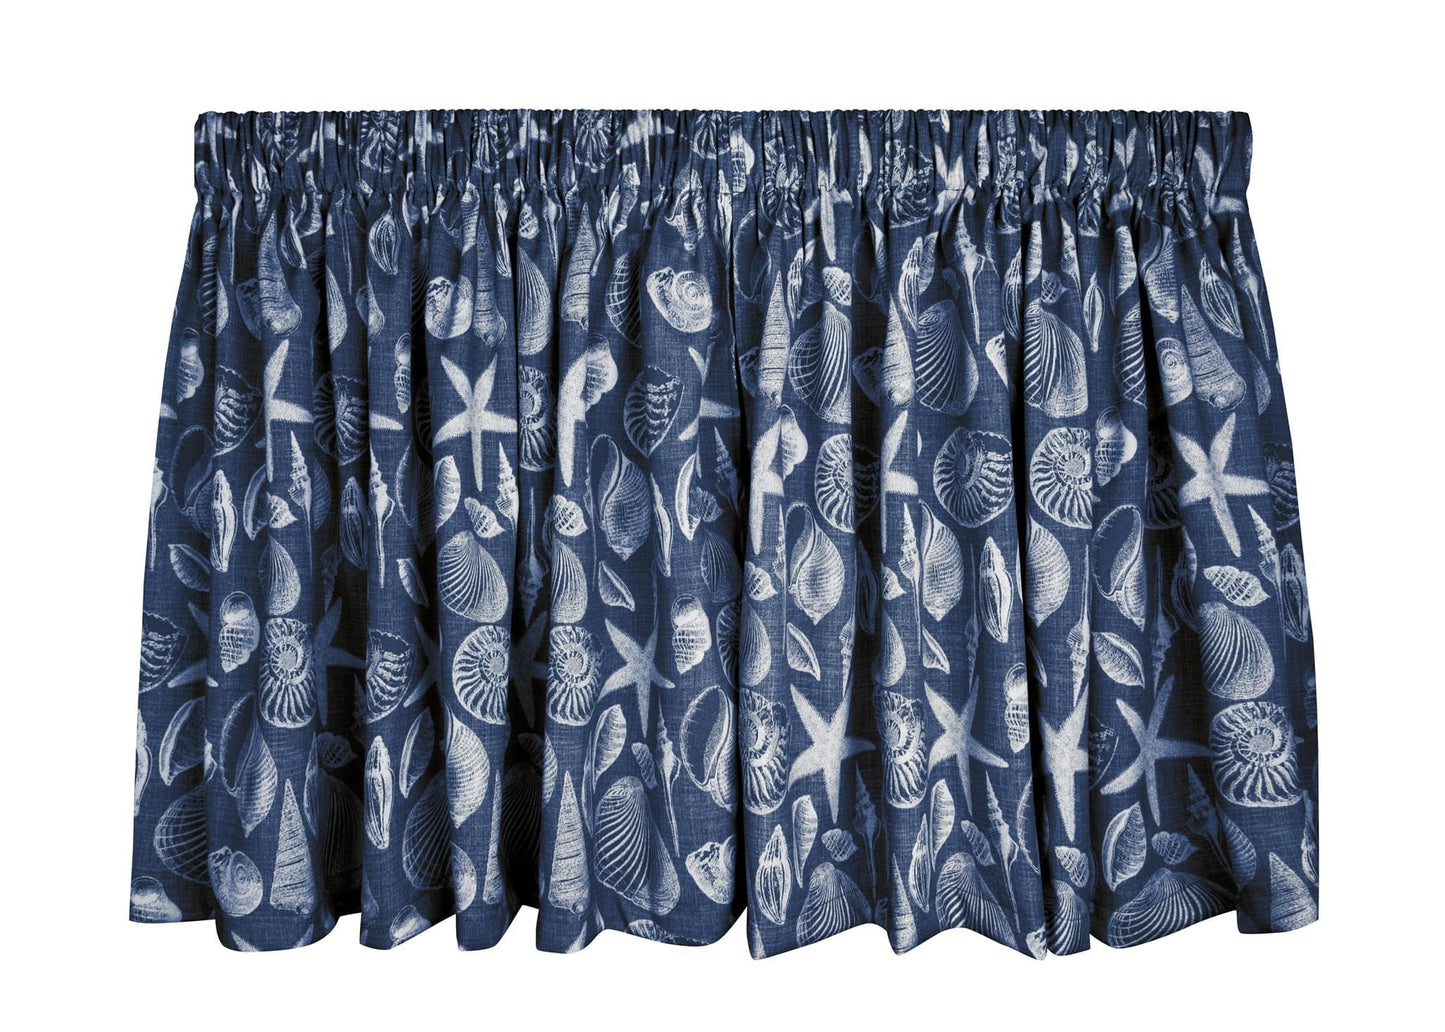 Shoreline Navy Tie-Up Valance or Tier Curtain Window Treatments - Seashells